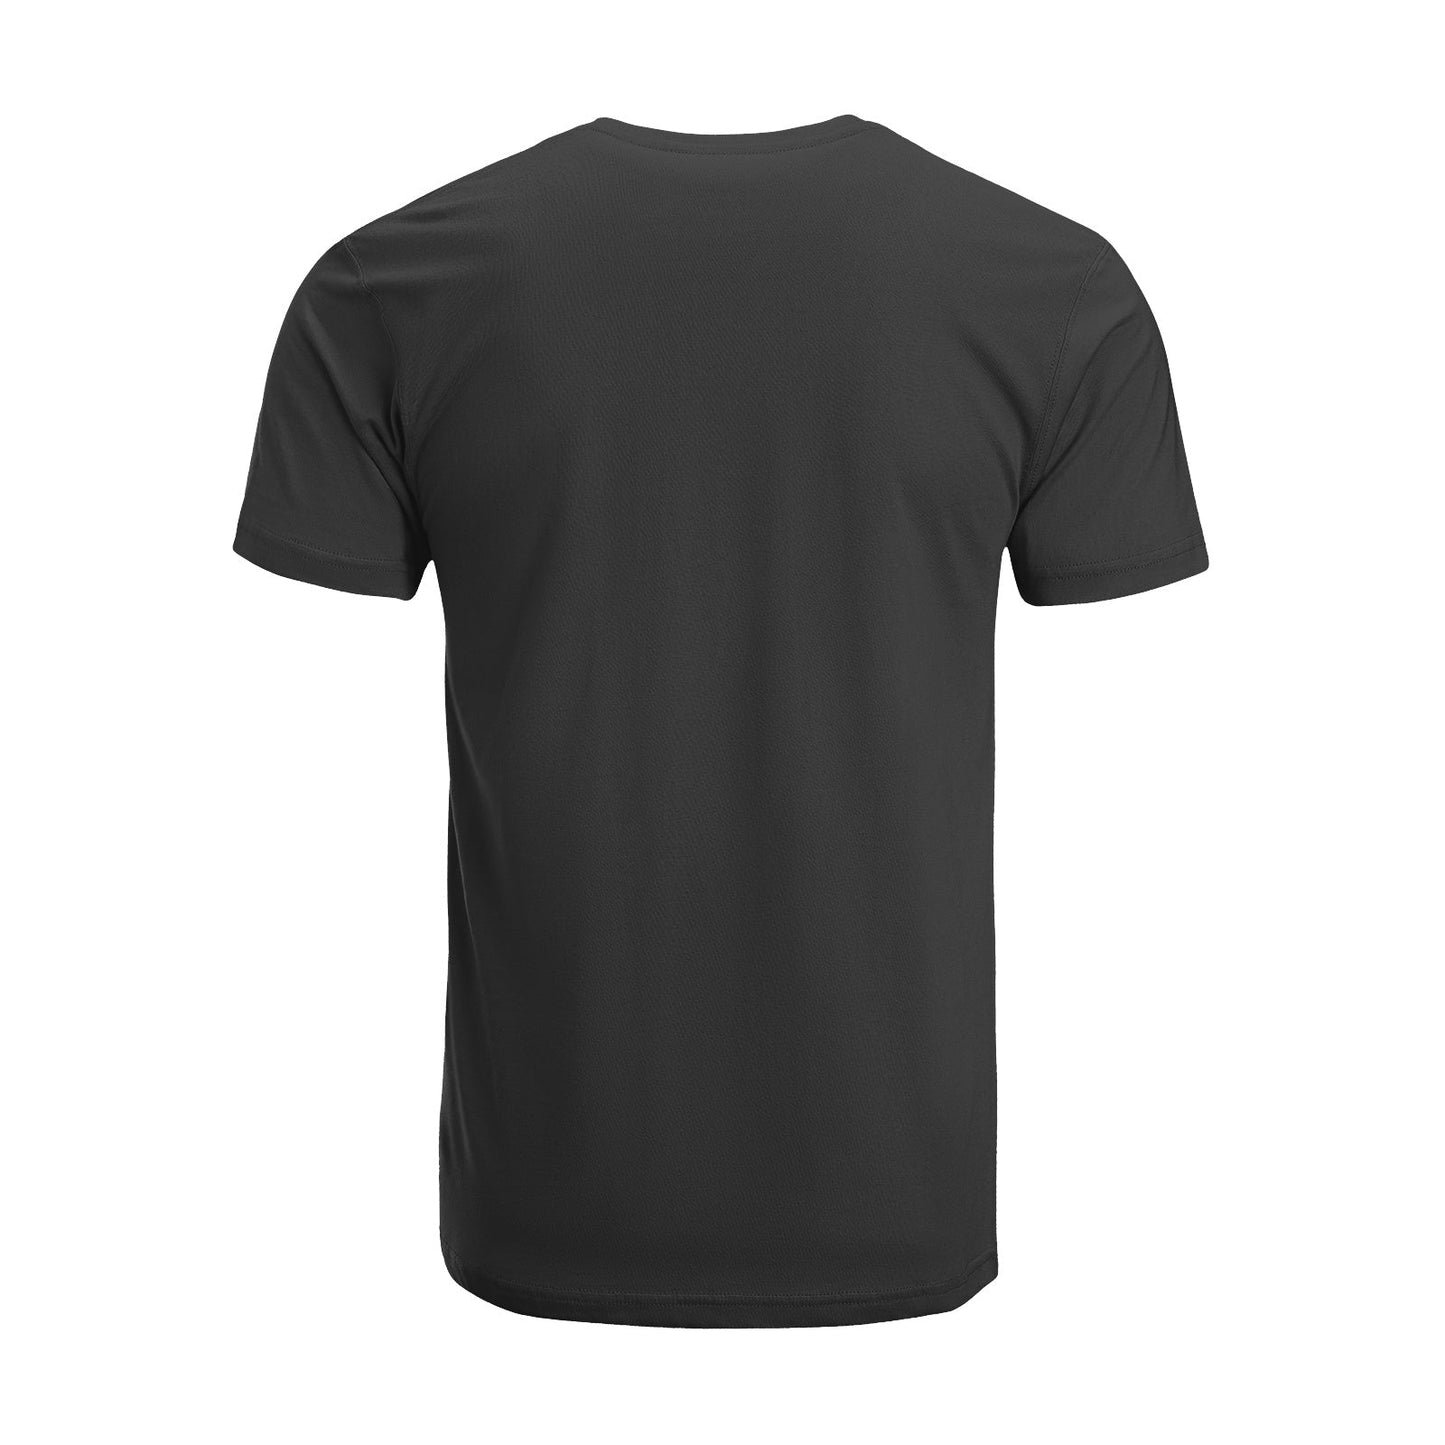 Unisex Short Sleeve Crew Neck Cotton Jersey T-Shirt MOM 35